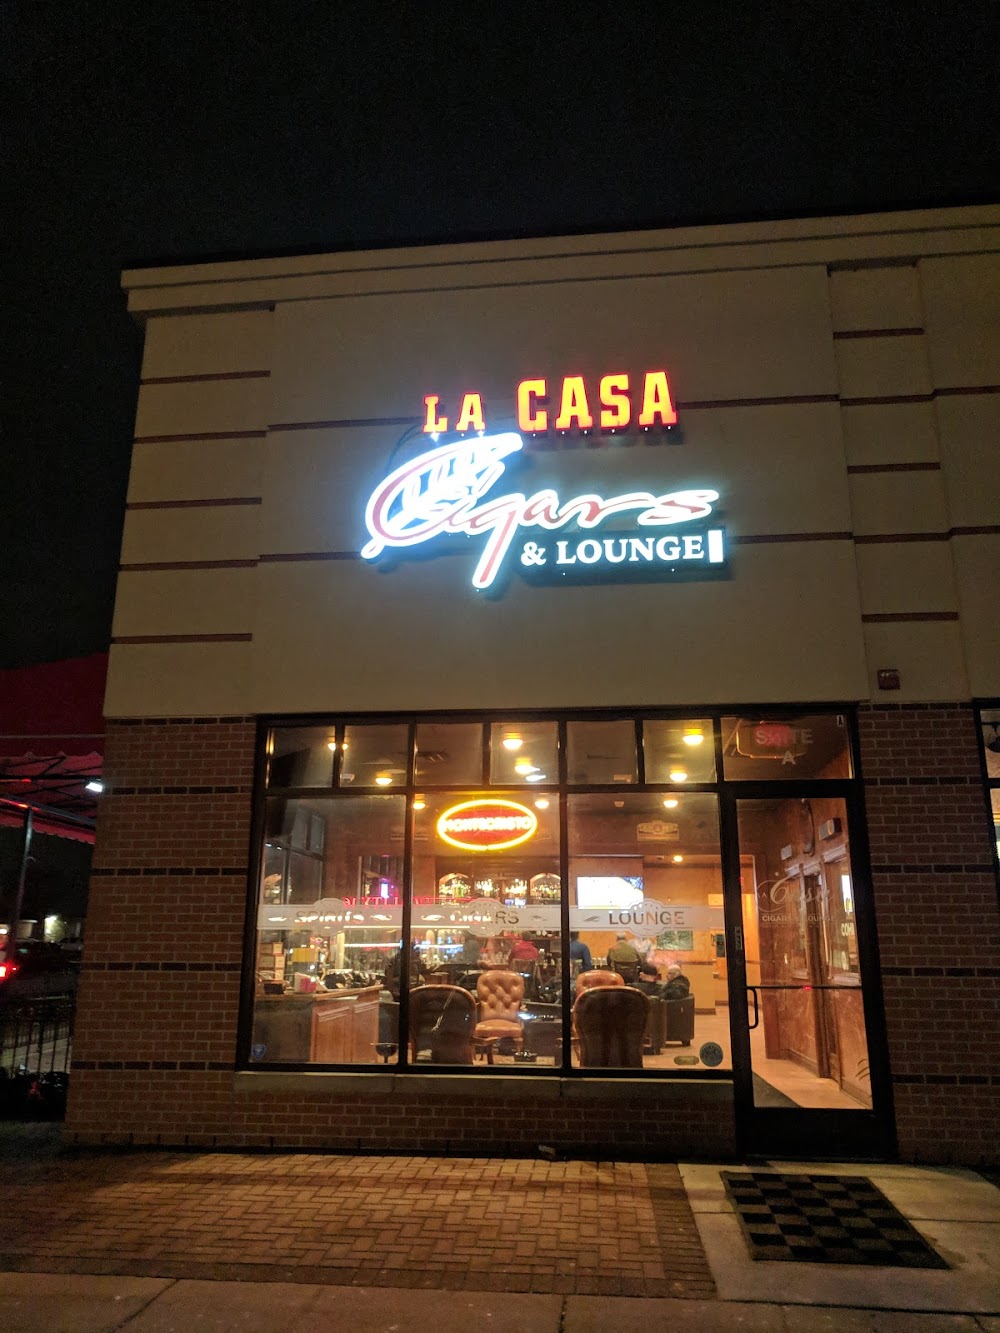 La Casa Cigars and Lounge